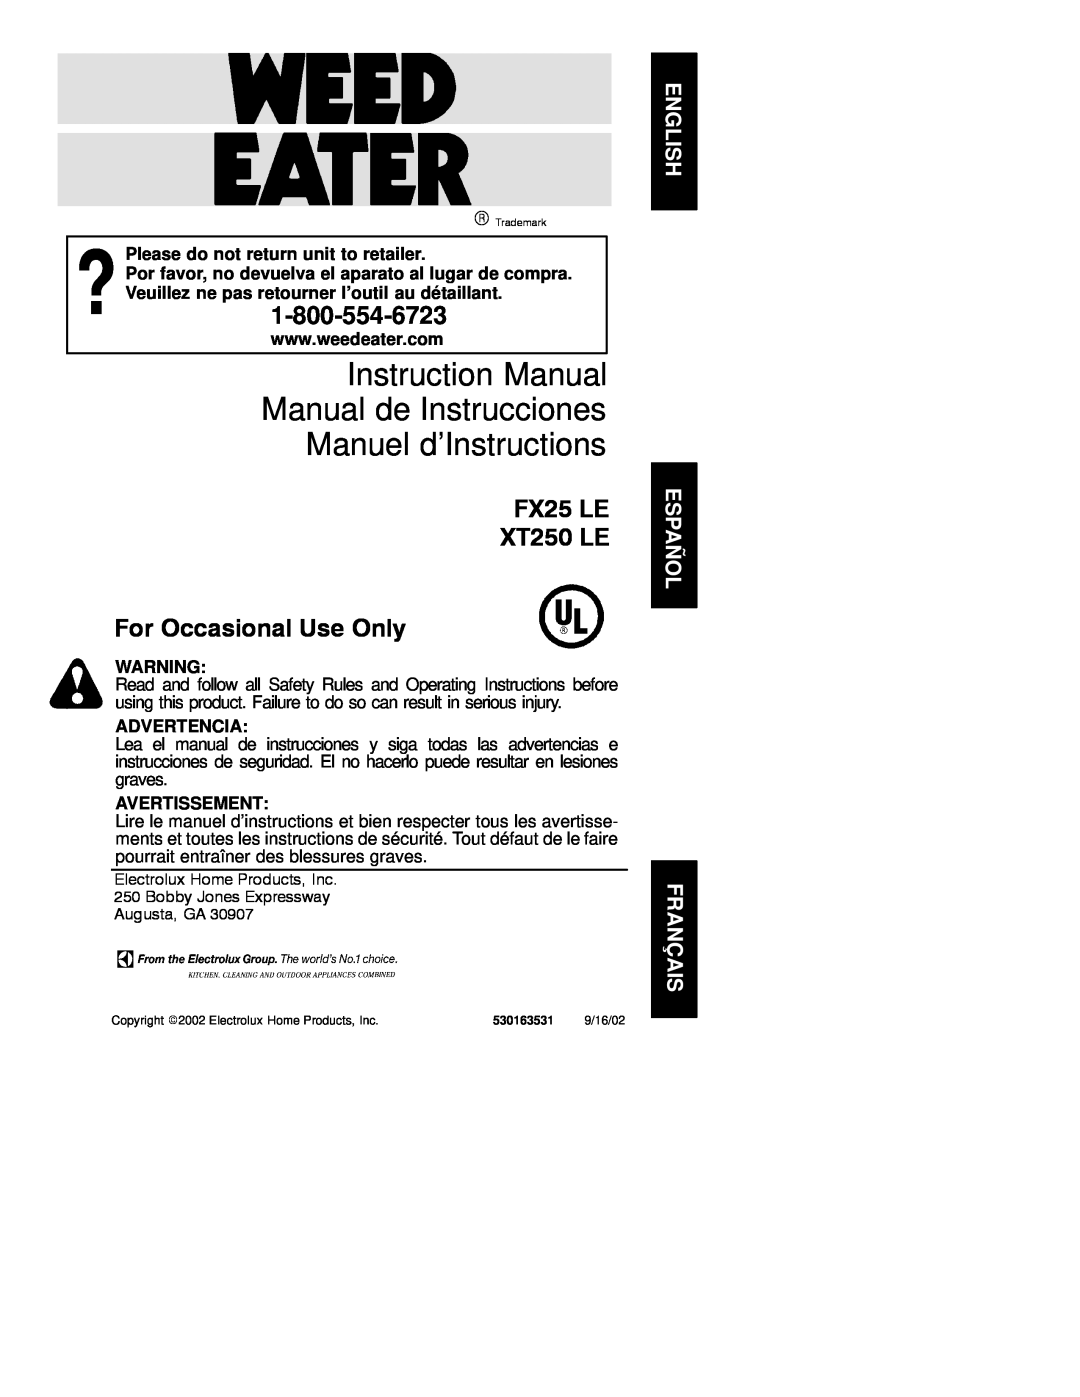 Weed Eater FX25 LE, XT250 LE instruction manual Please do not return unit to retailer, Advertencia, Avertissement 